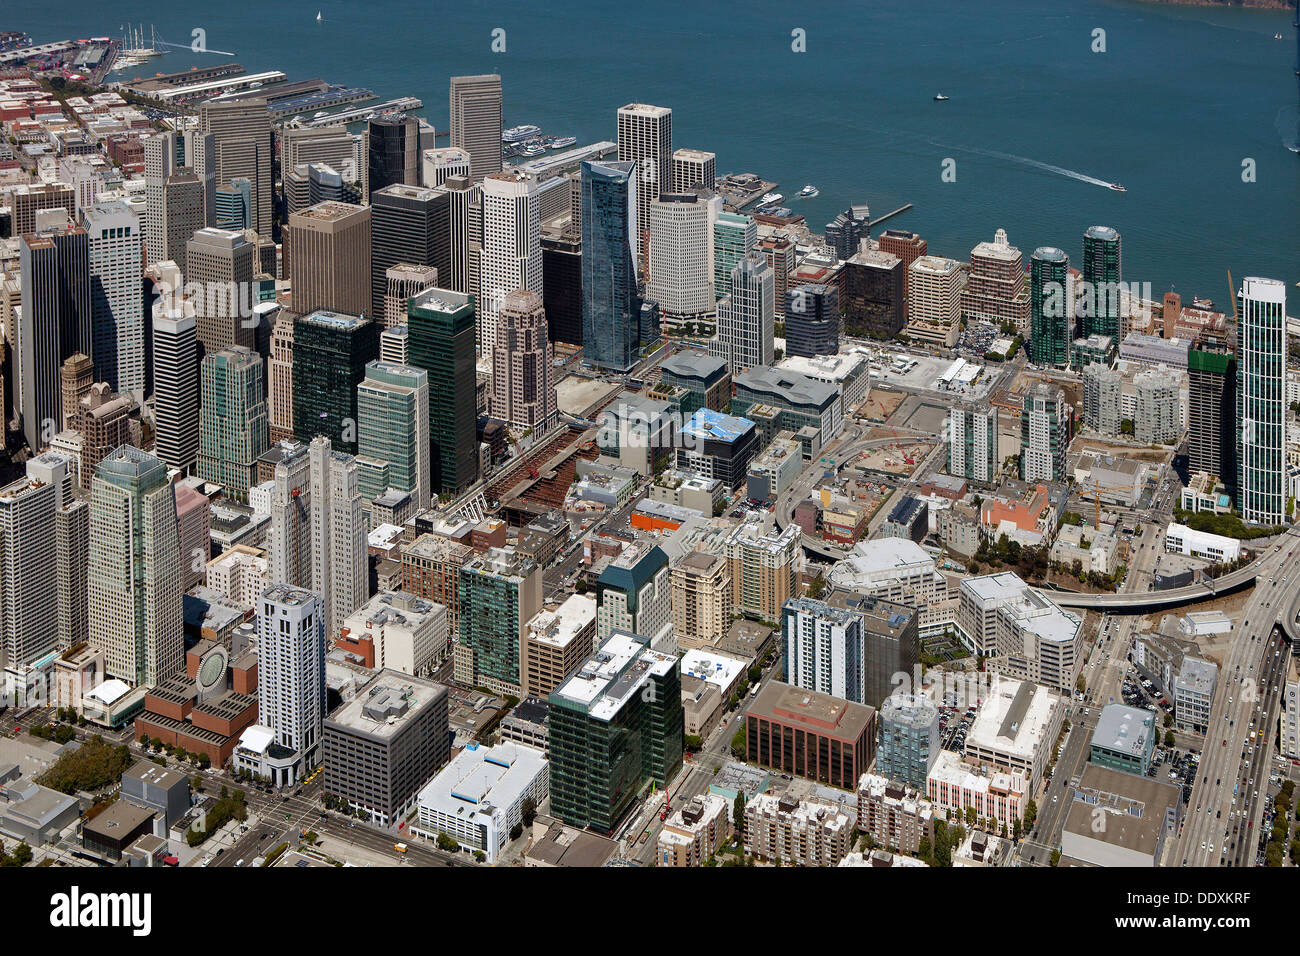 aerial photograph South of Market Street Transbay Terminal Center San Francisco, California Stock Photo